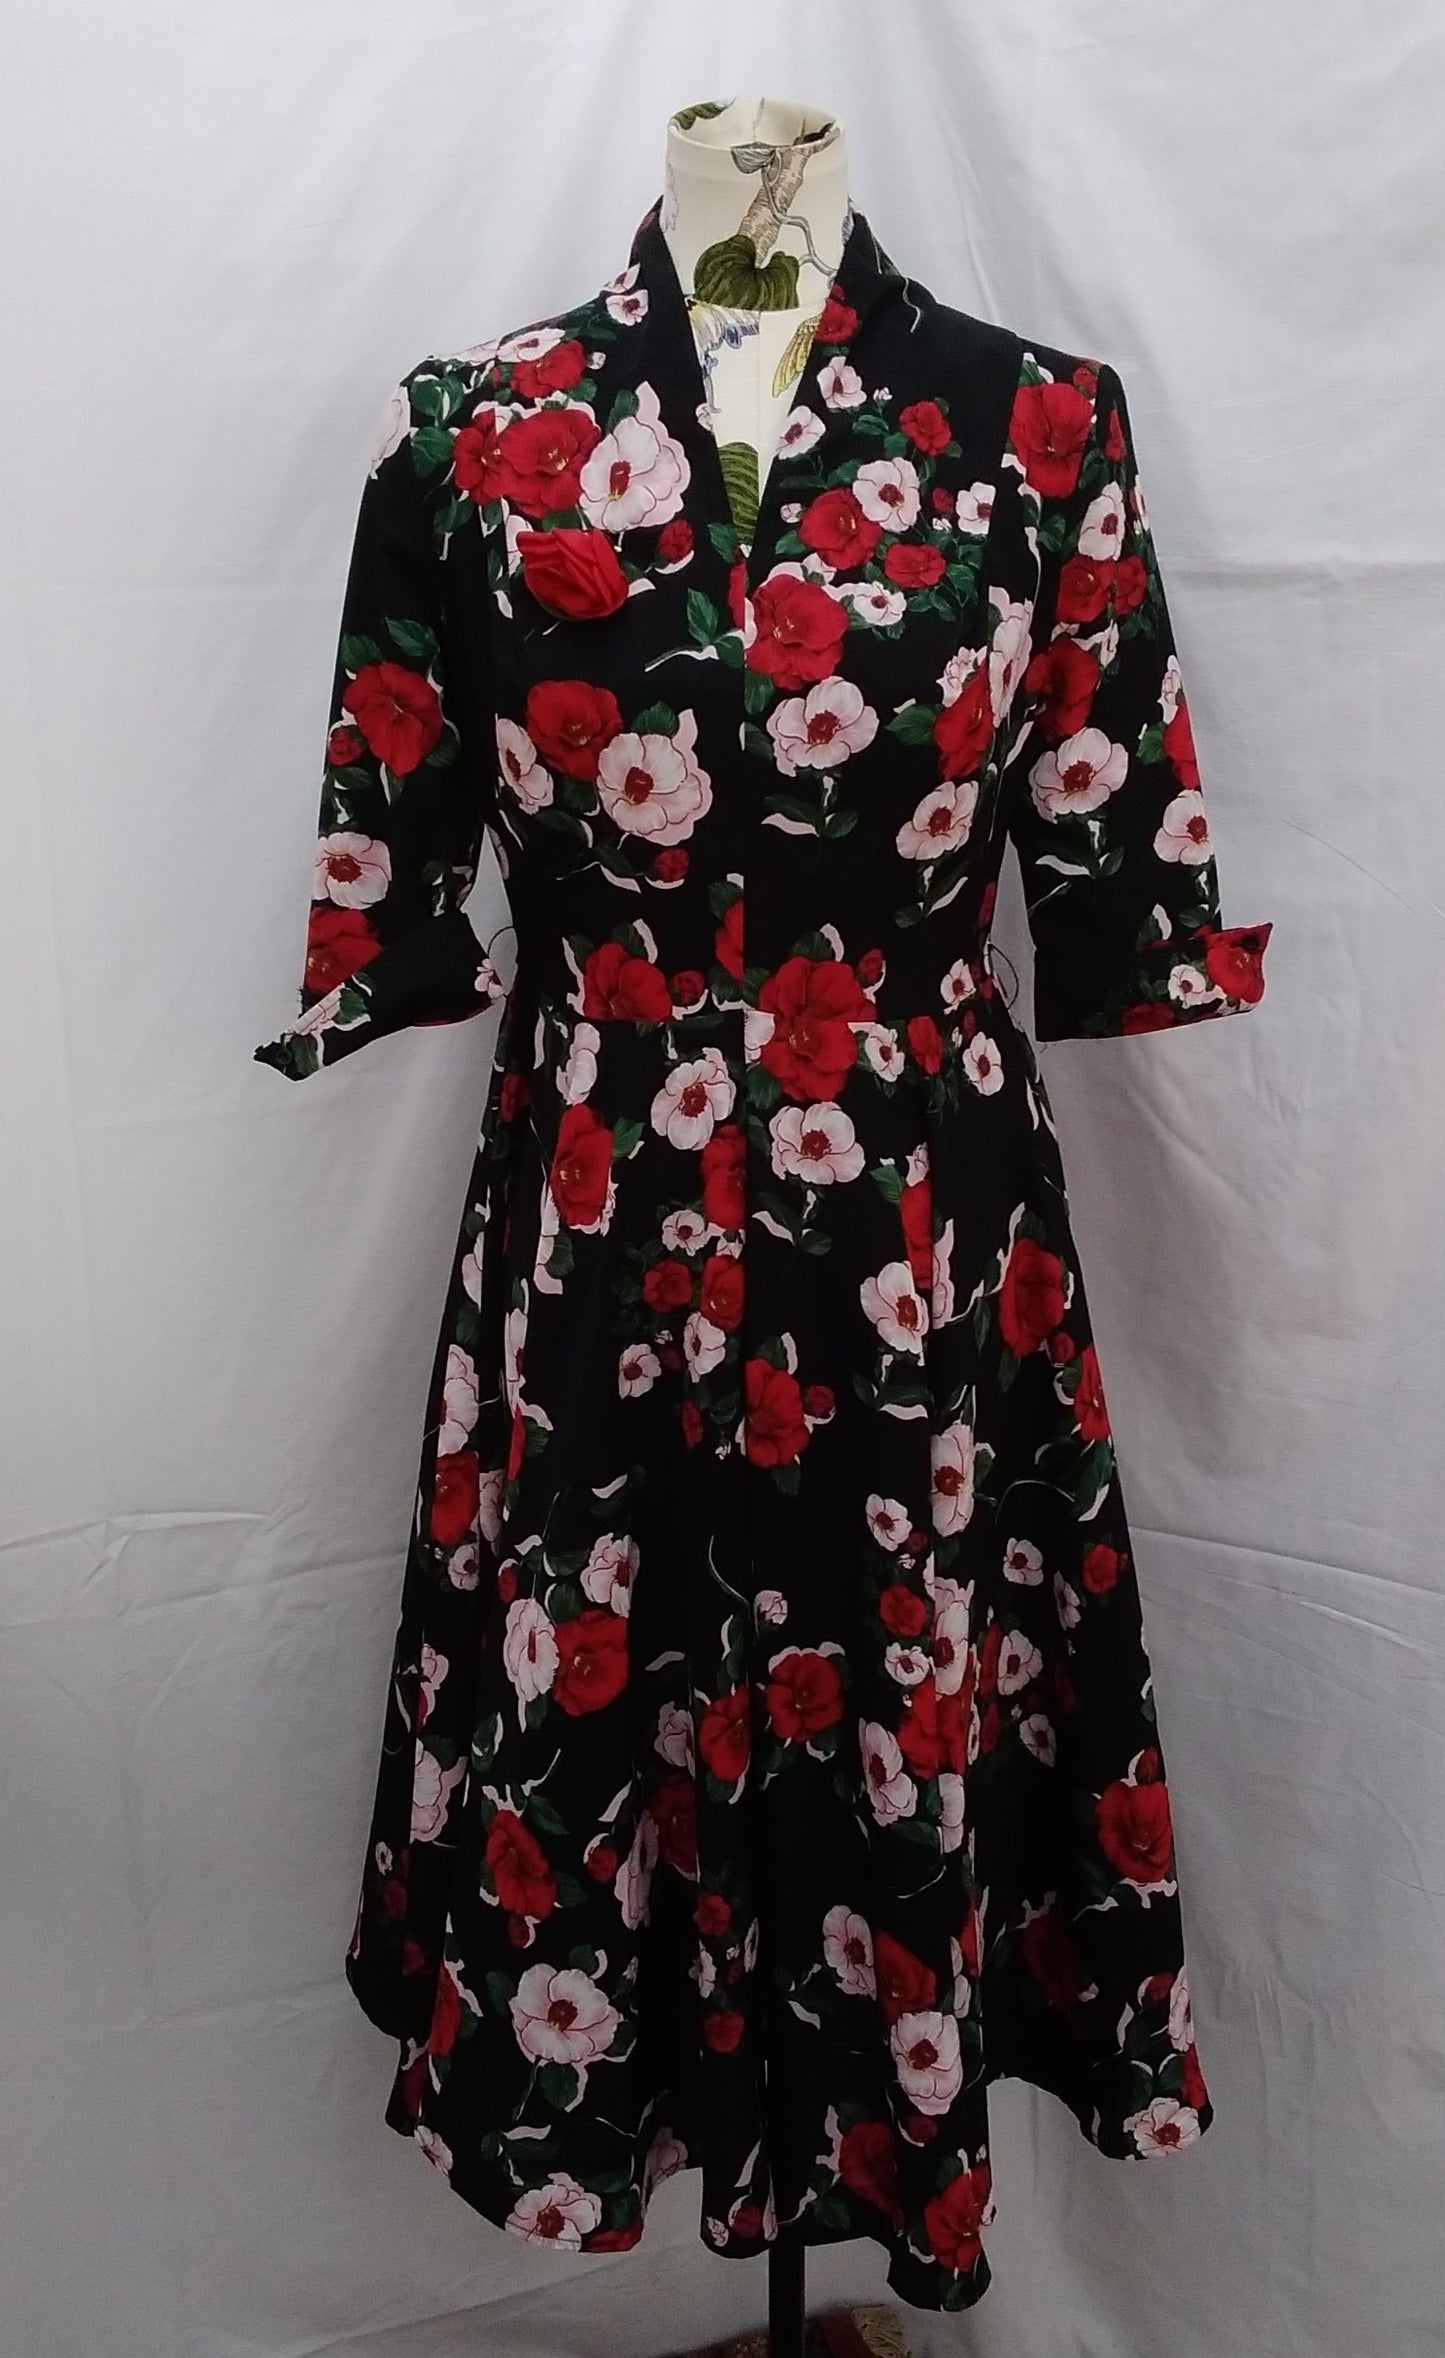 UNIQUE VINTAGE Red, White and Black Floral Print Dress -- S